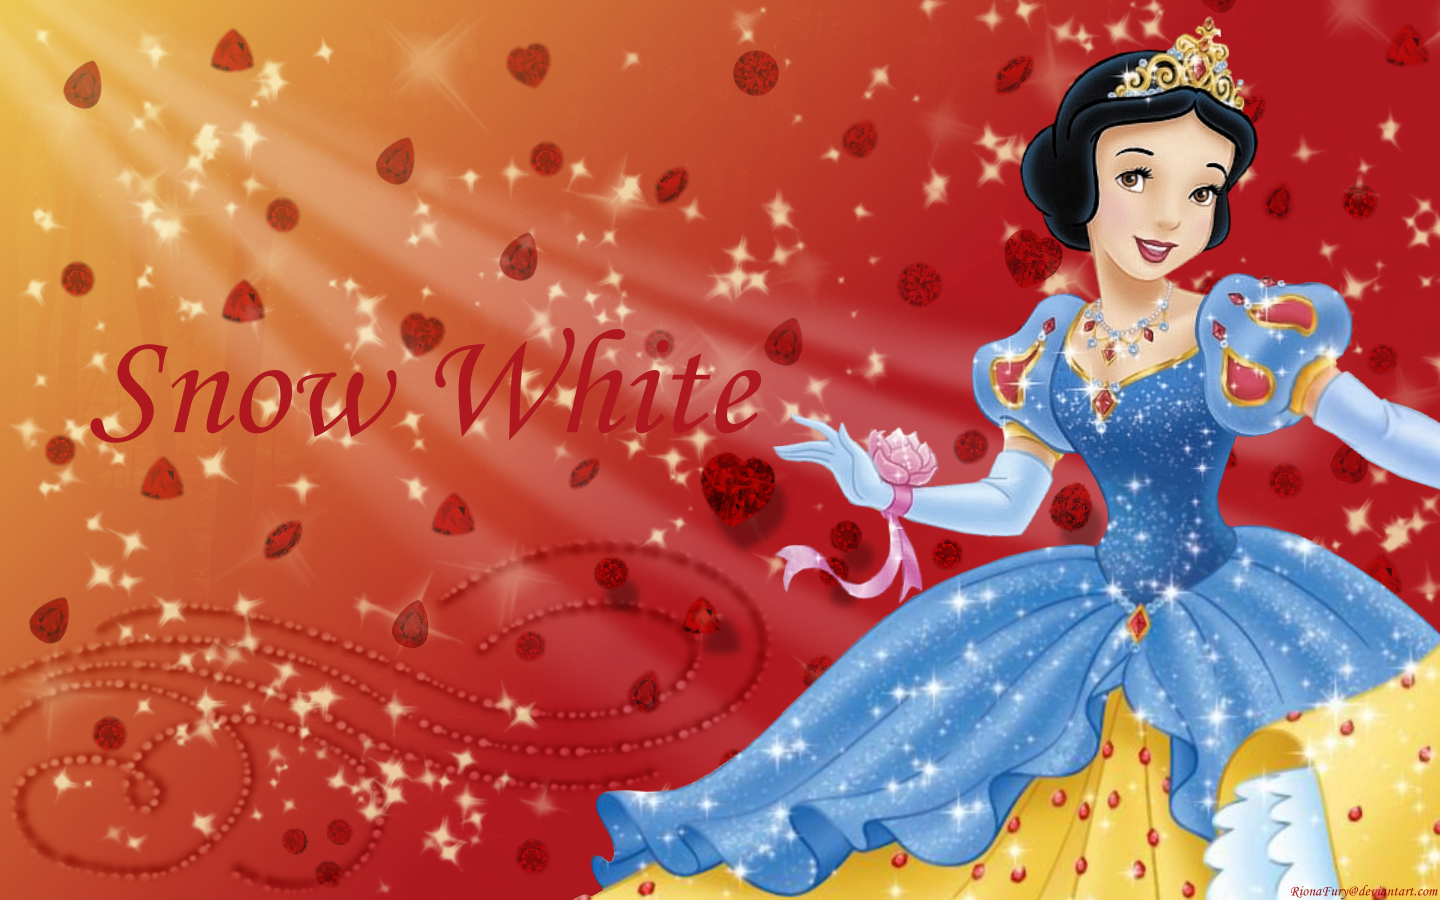 Snow White and the Seven Dwarfs Wallpaper: Snow White. Disney princess snow white, Snow white image, Snow white wallpaper